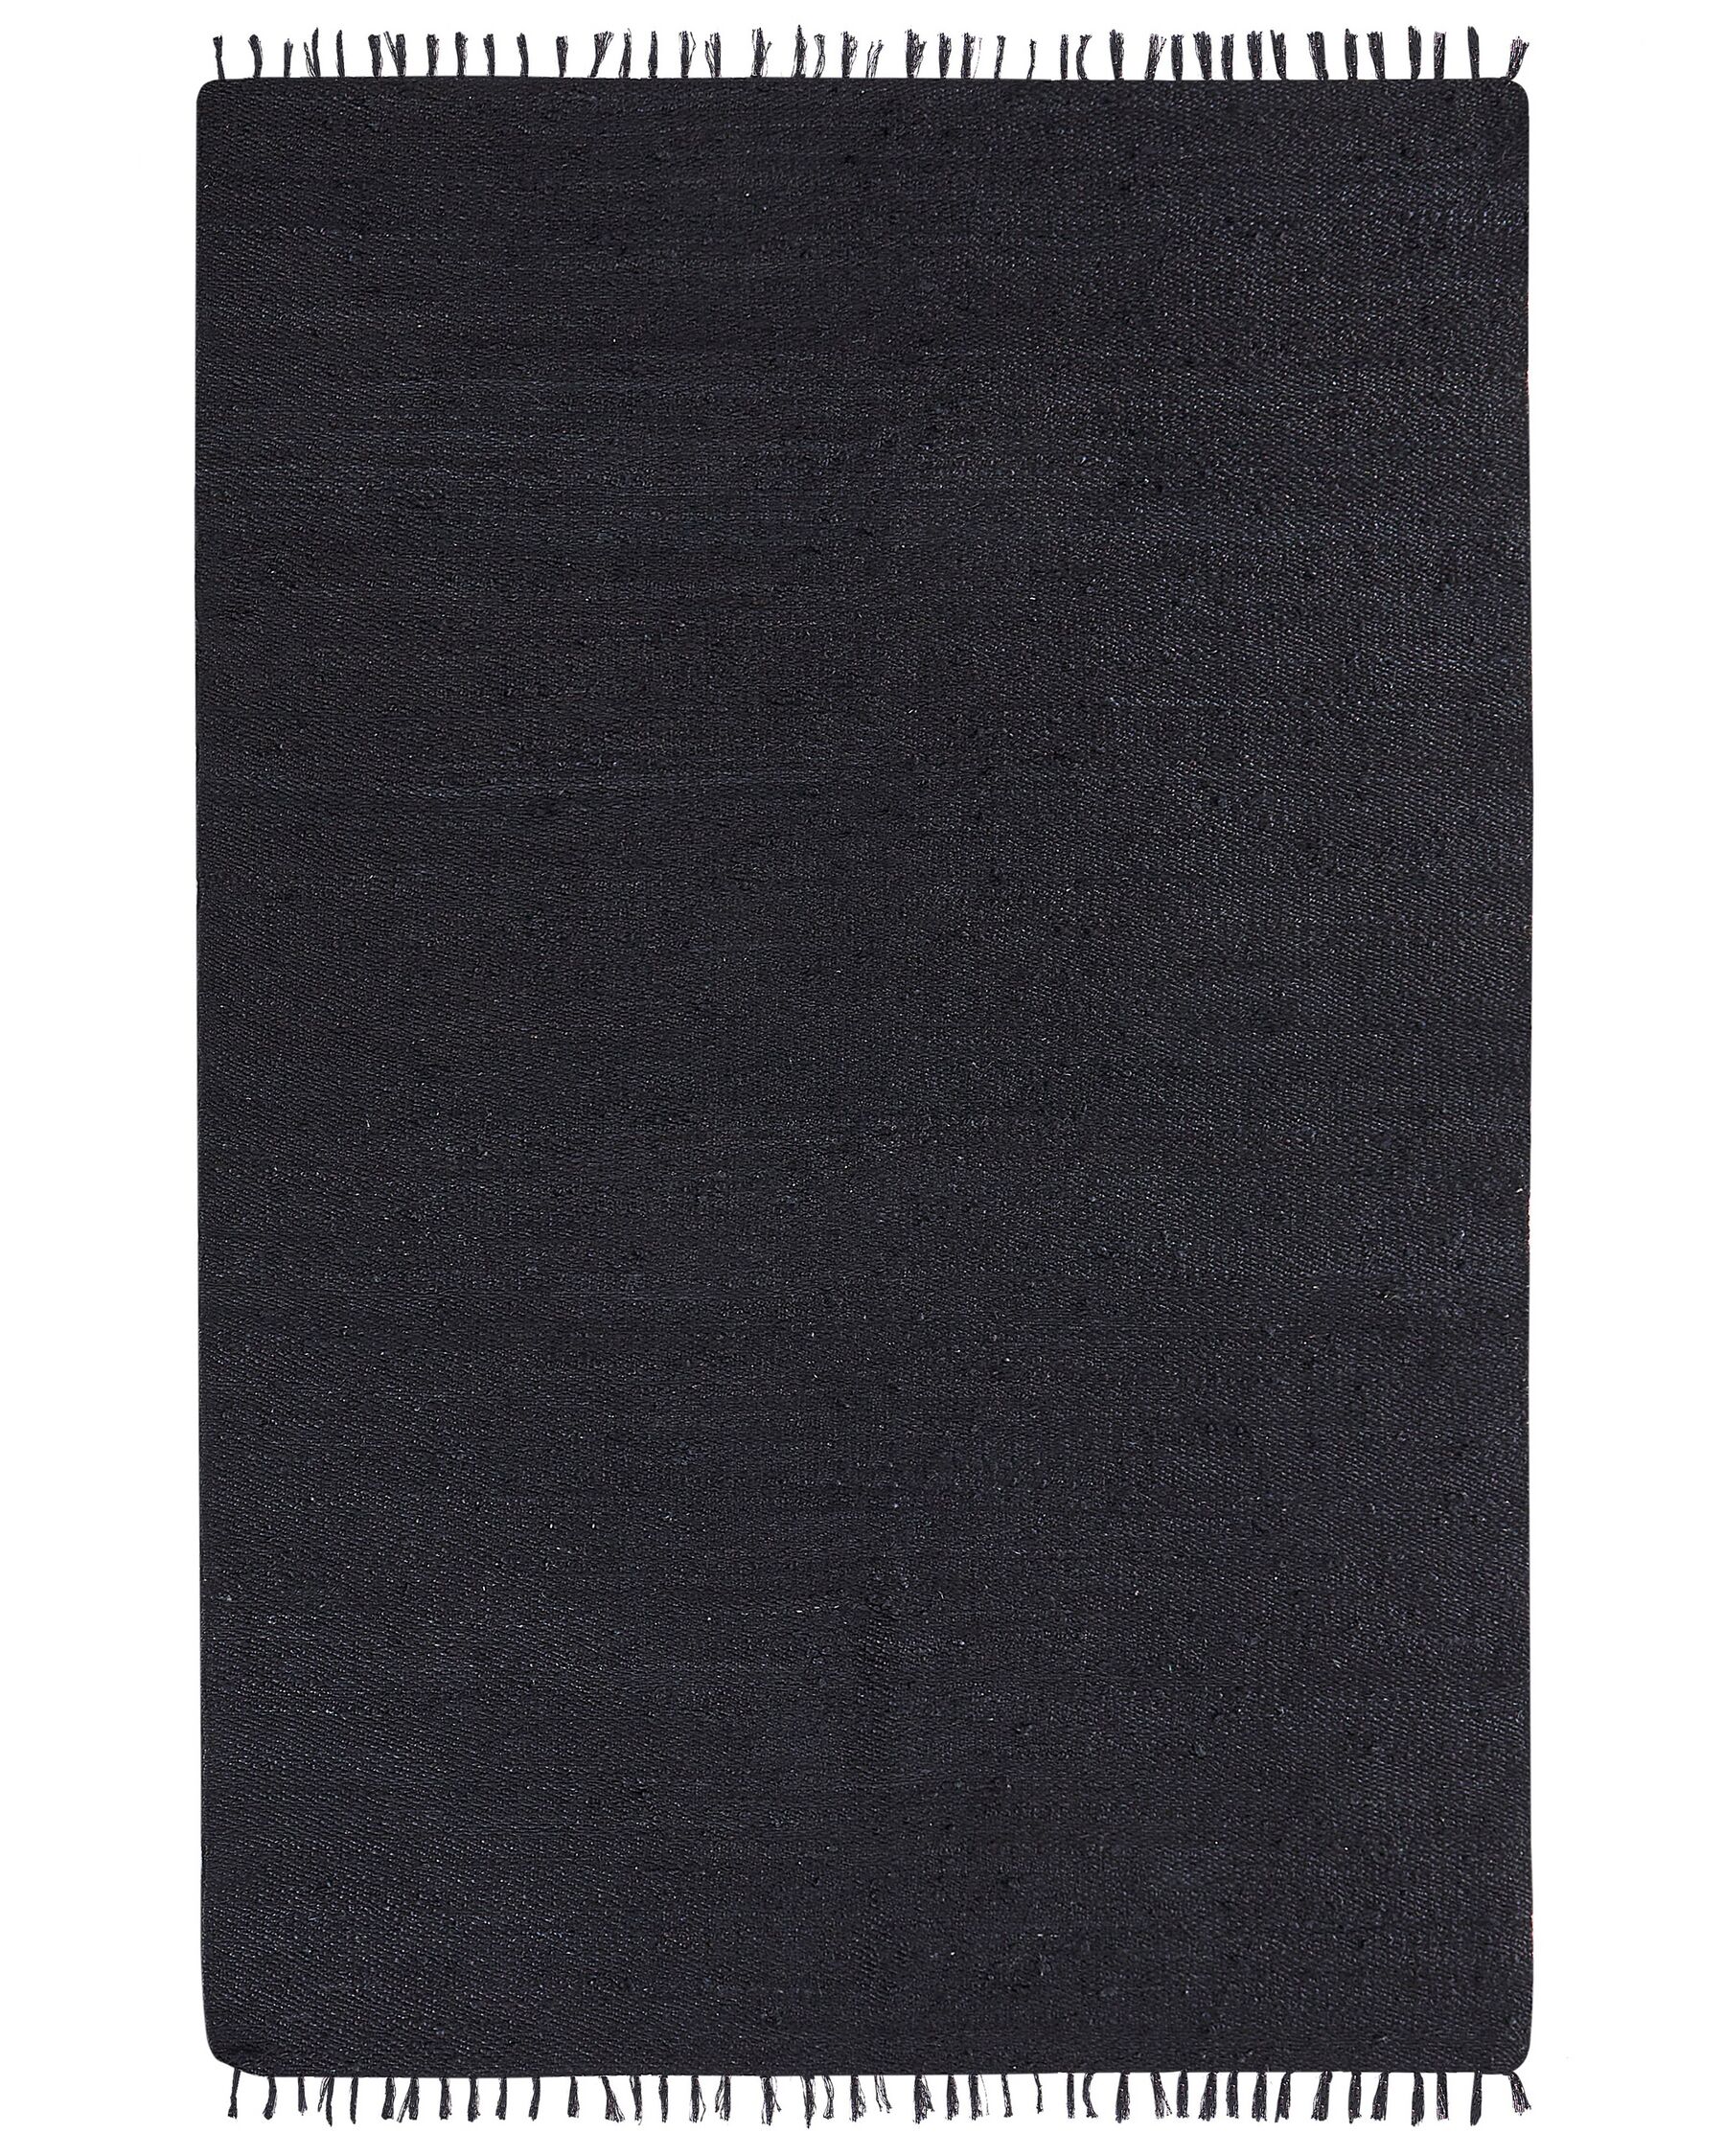 Vloerkleed jute zwart 200 x 300 cm SINANKOY_904006